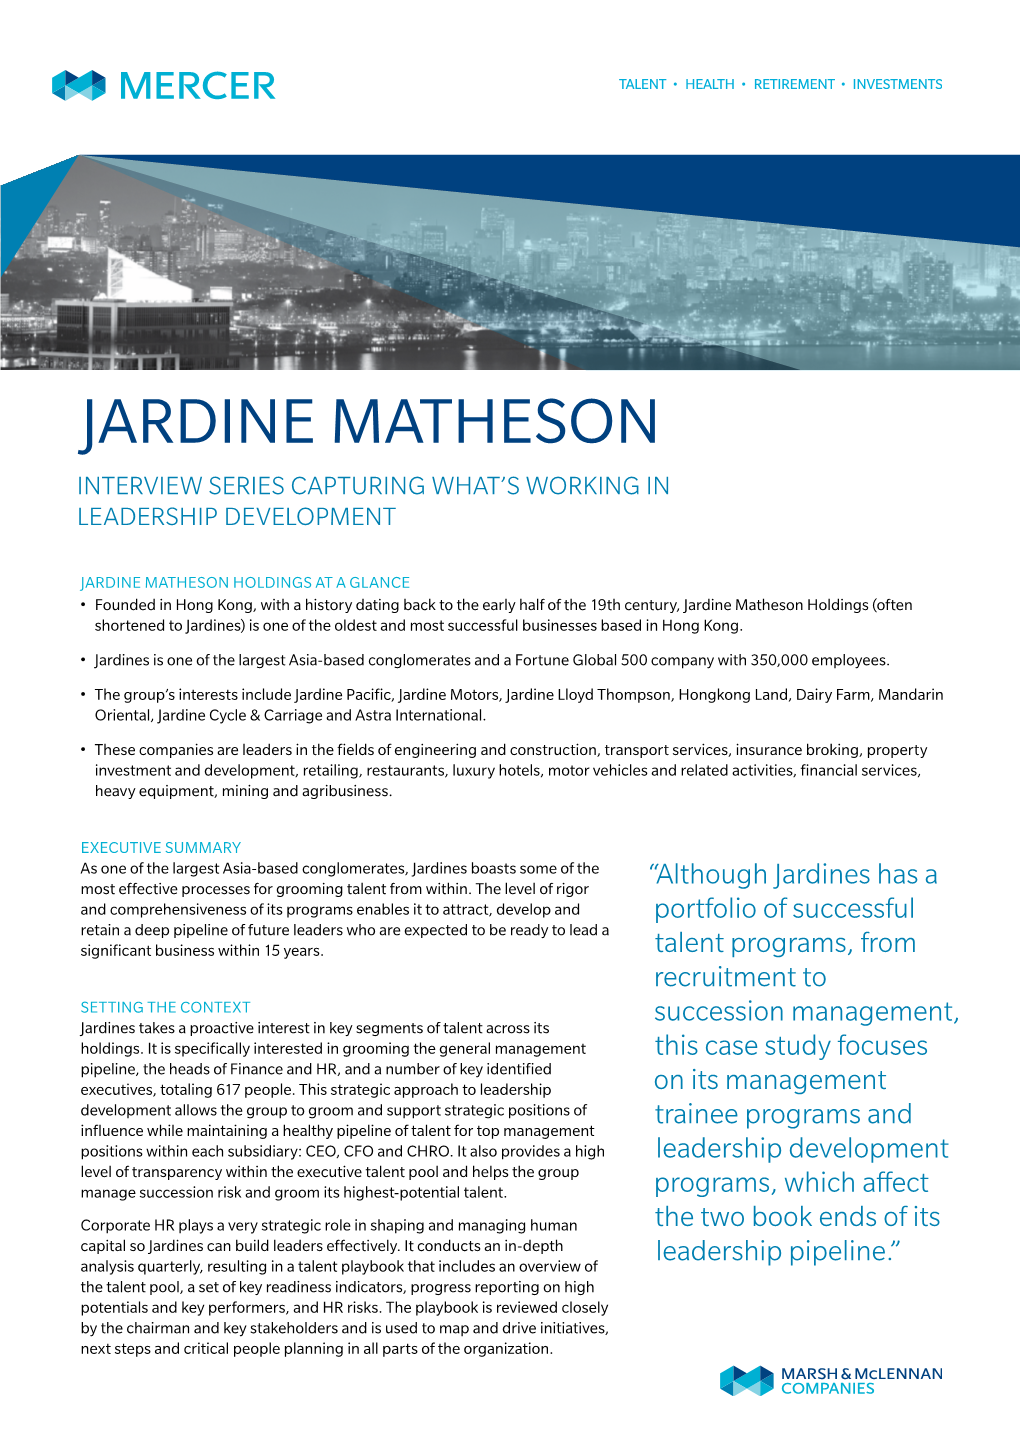 JARDINE MATHESON Interview Series Capturing What’S Working in Leadership Development